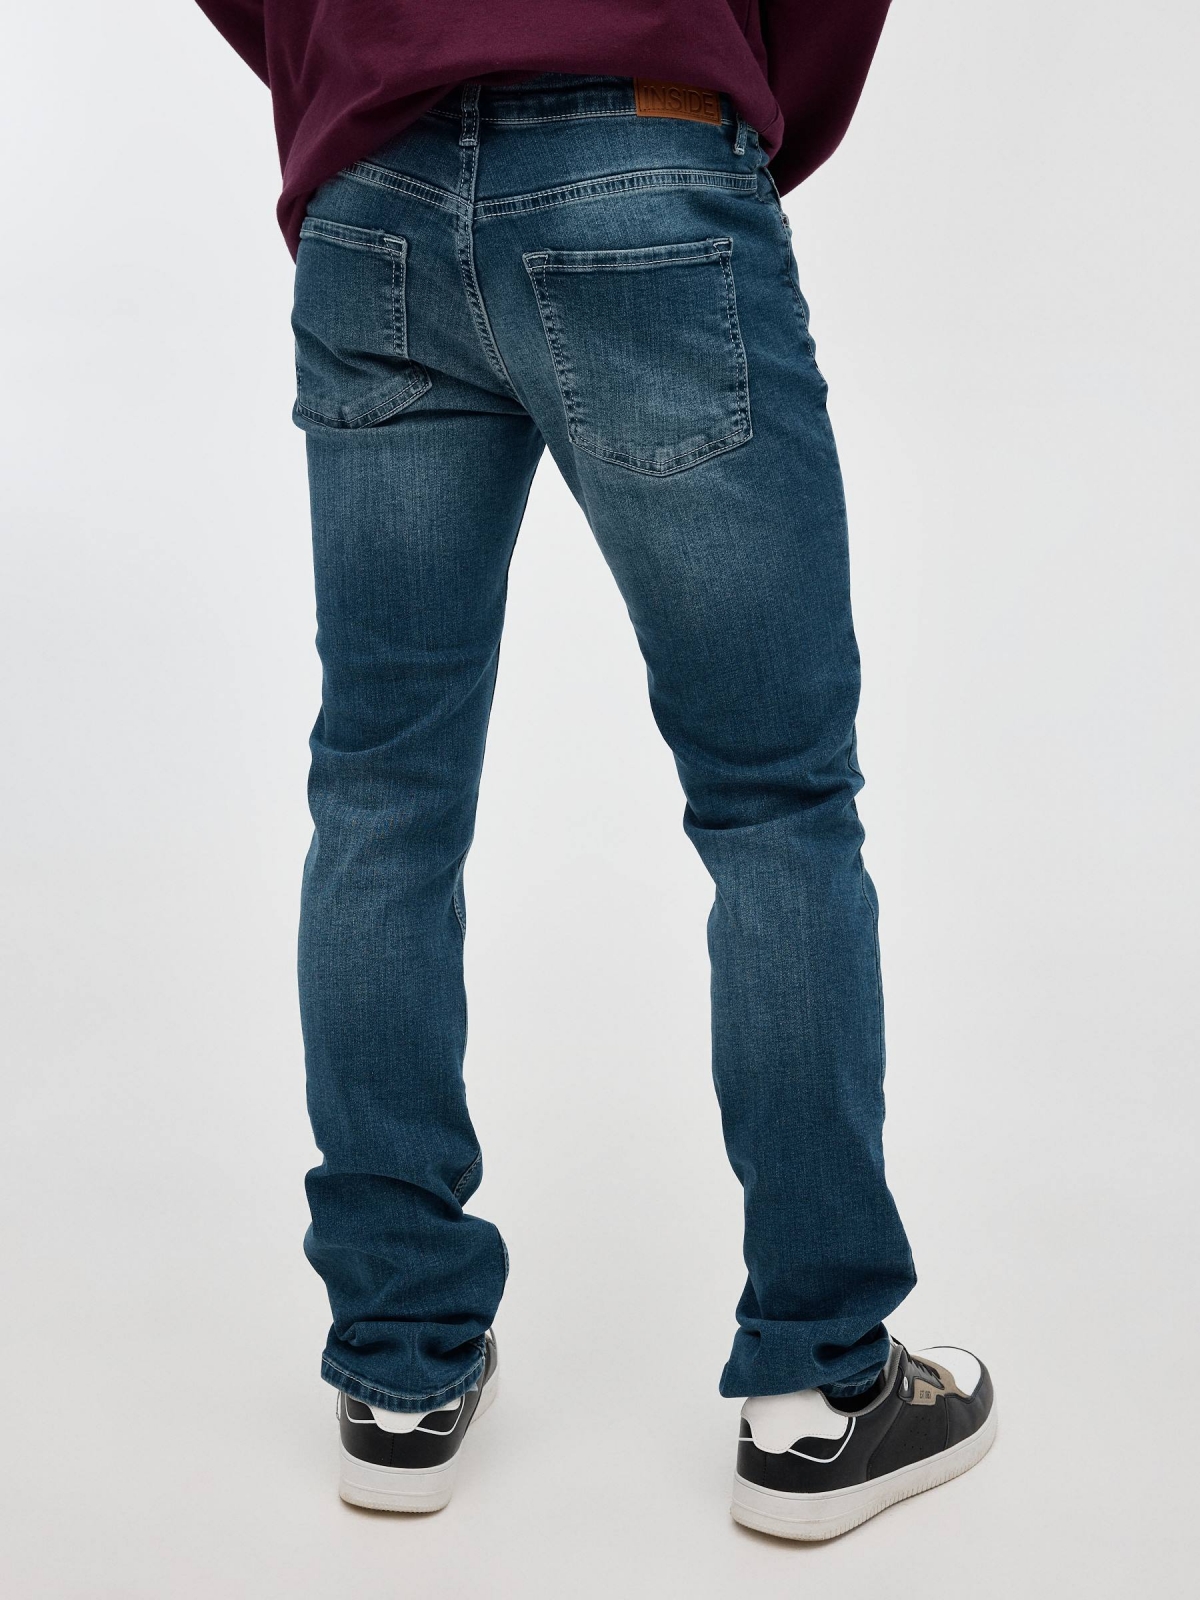 Jeans regular azul oscuro azul vista media trasera